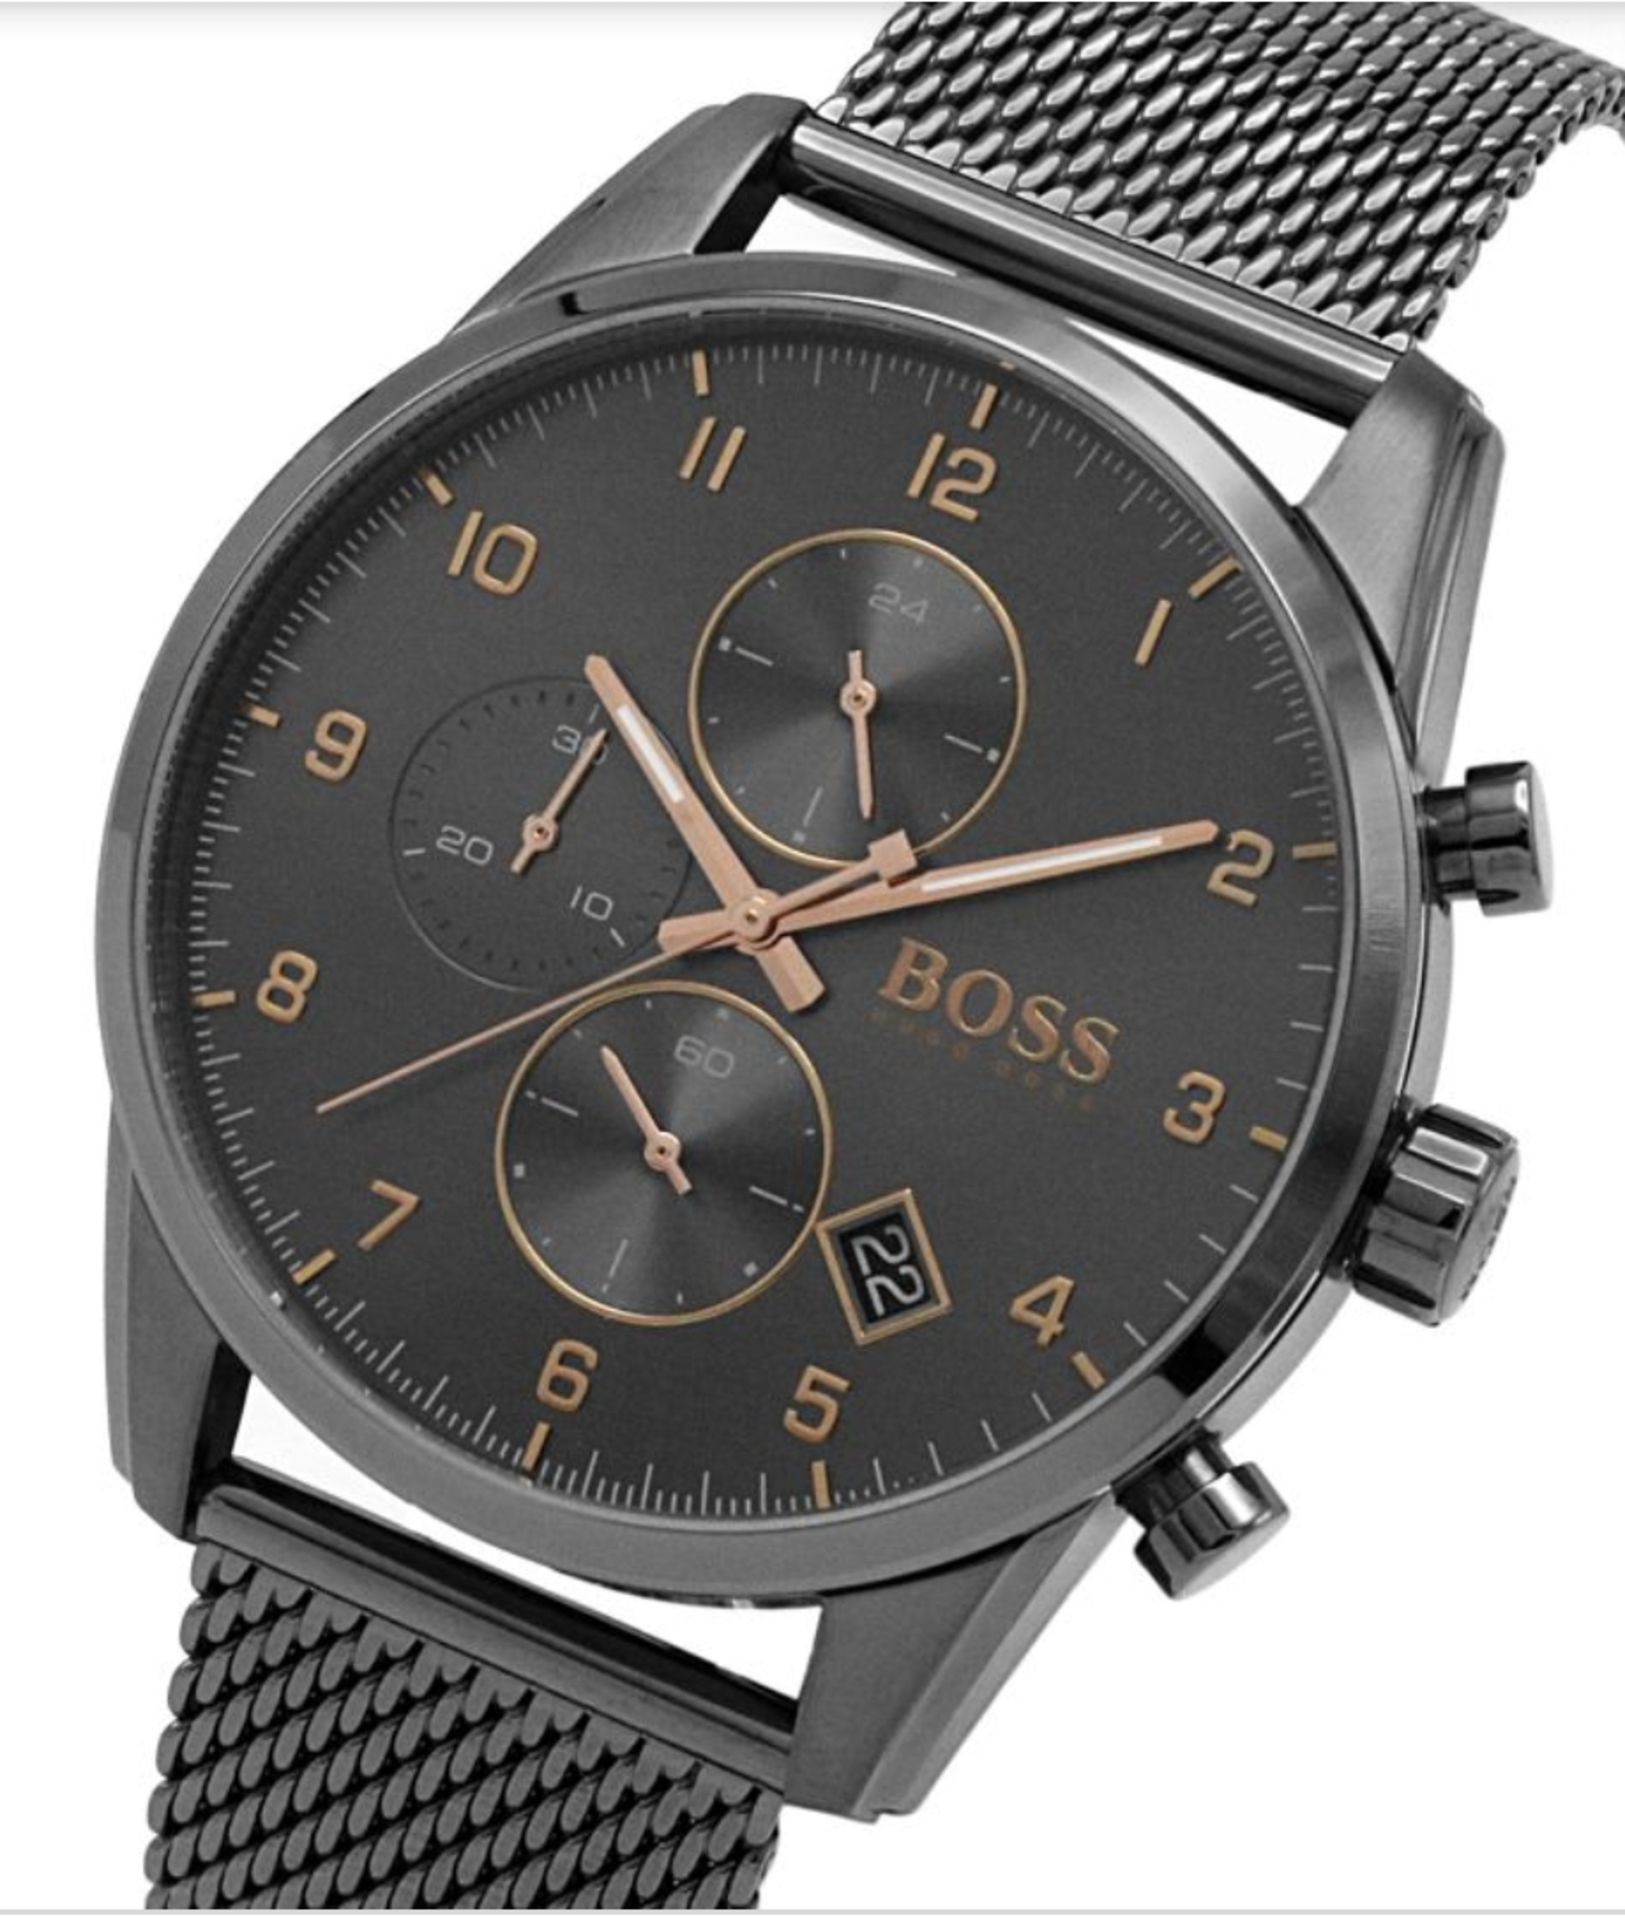 Hugo Boss 1513837 Men's Skymaster Grey Mesh Band Quartz Chronograph Watch - Image 6 of 6